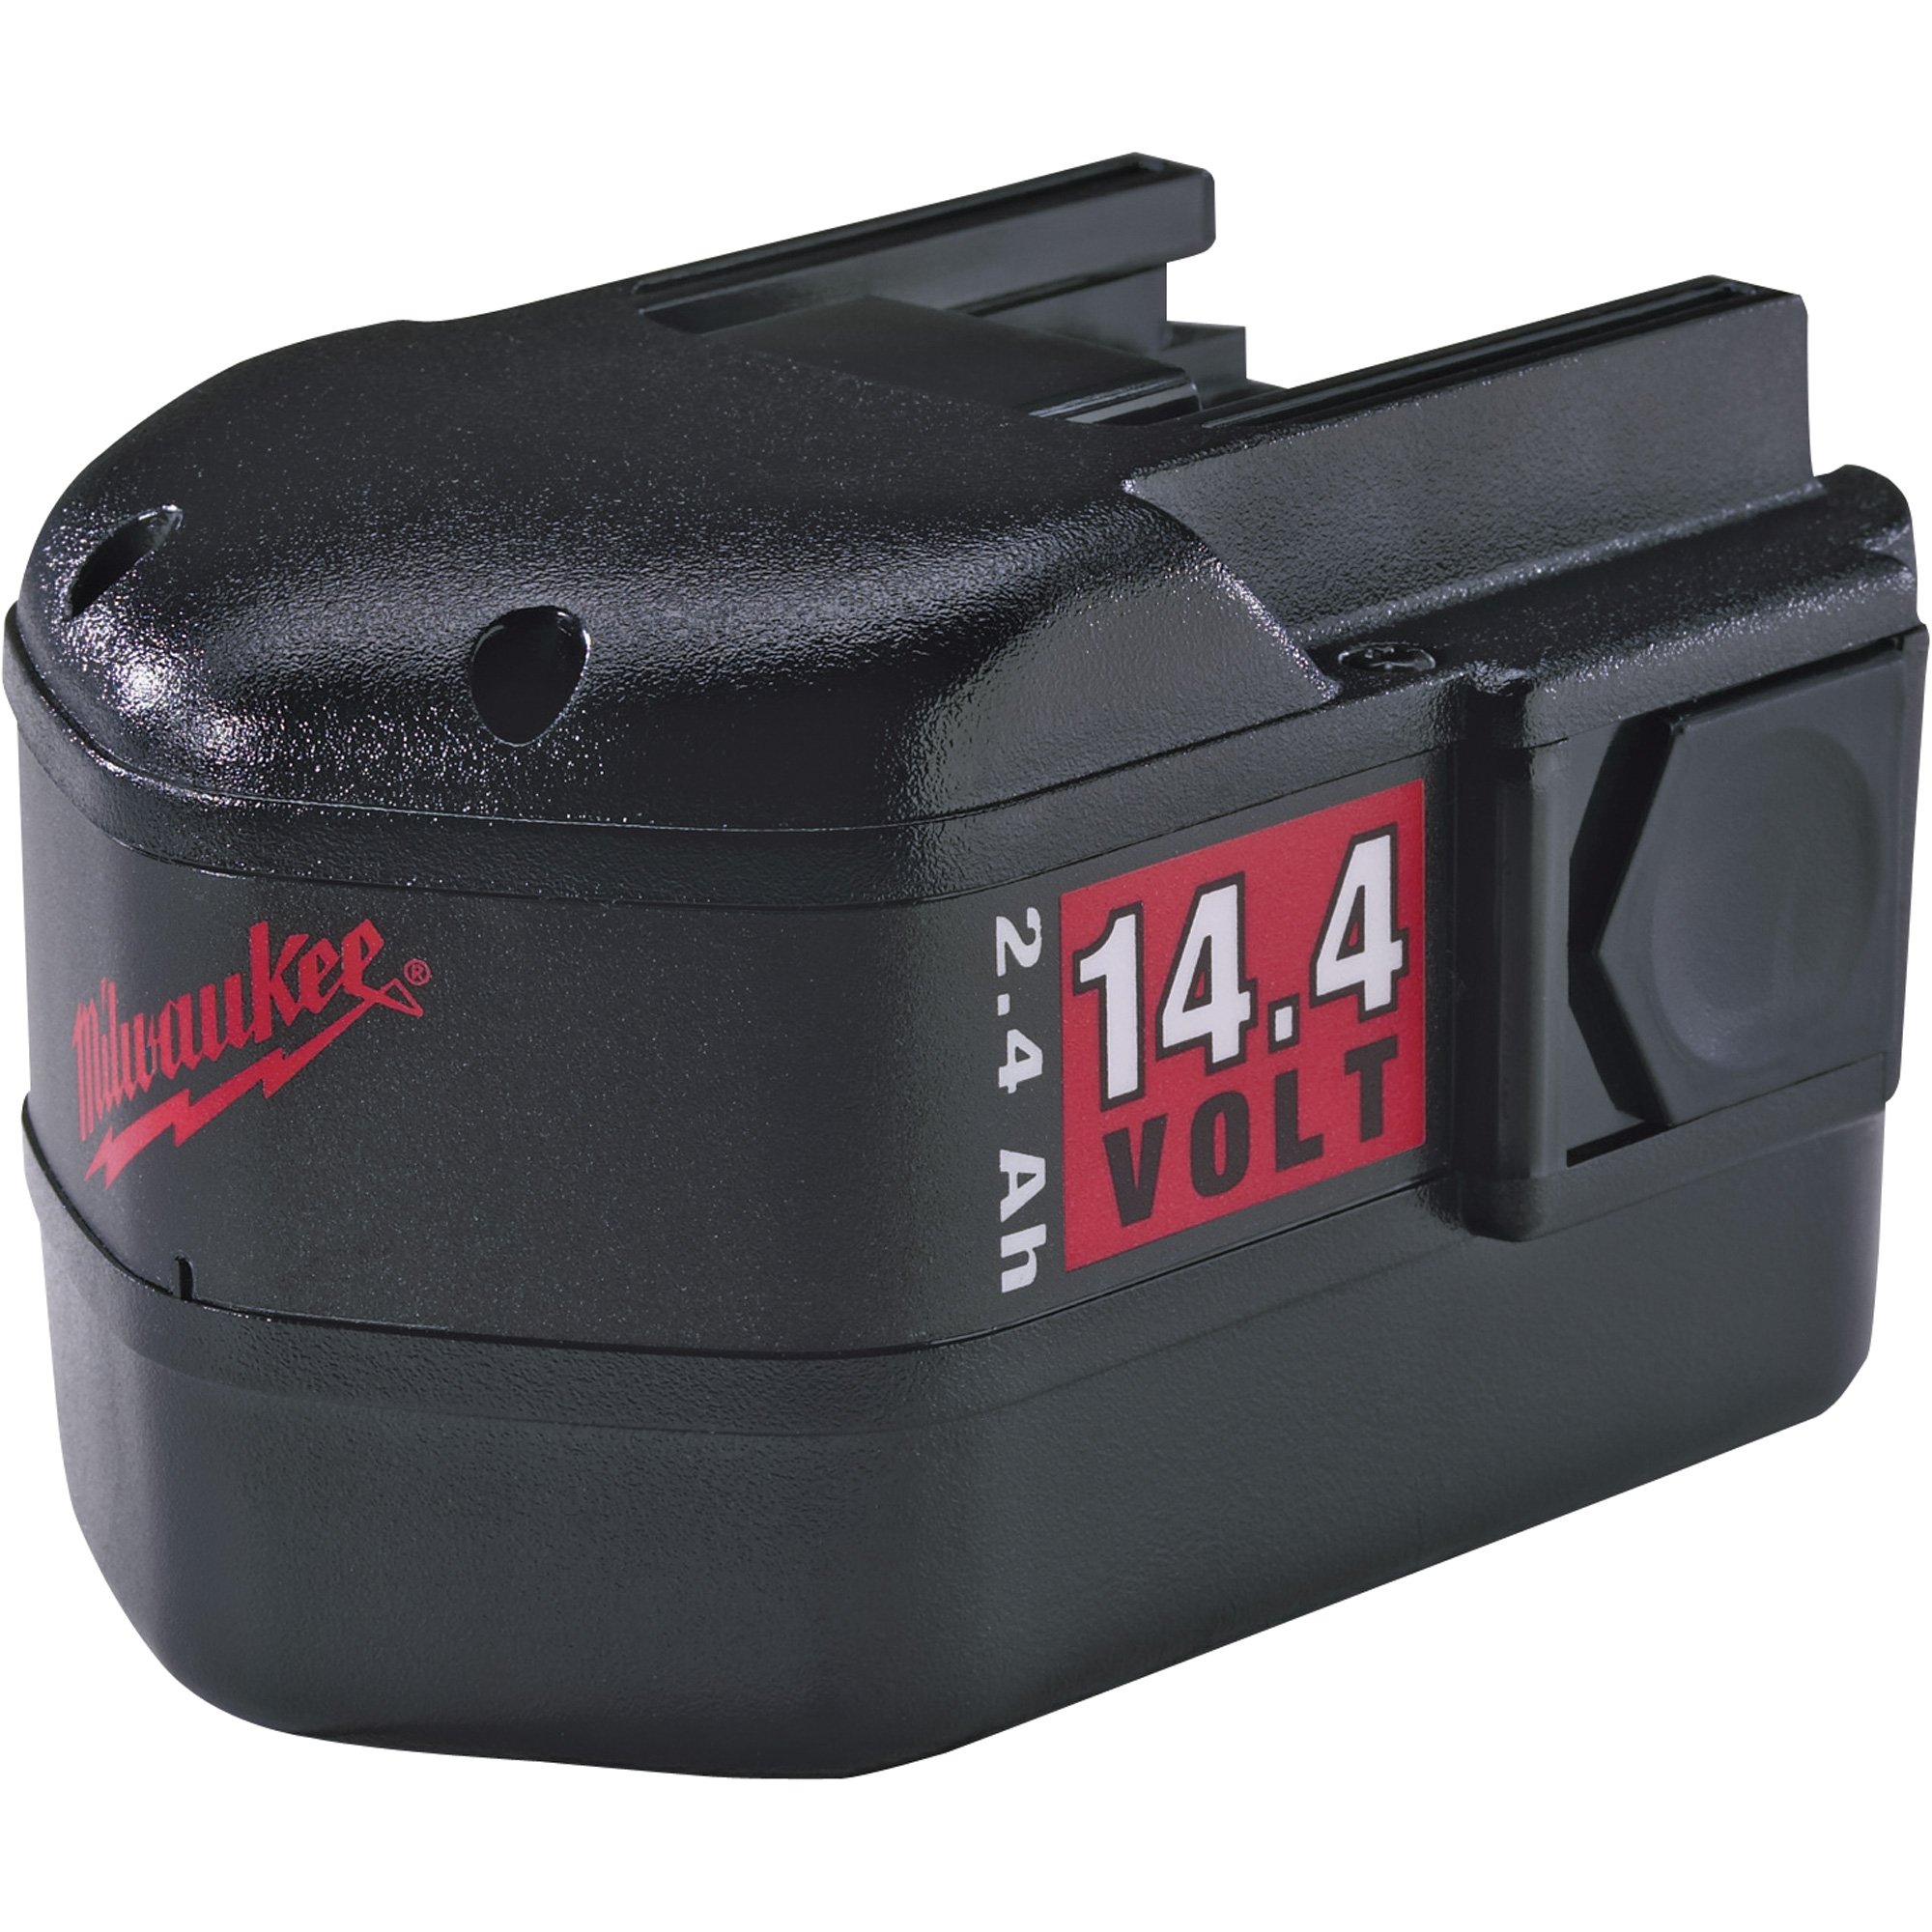 nike wmns flex trainer 4 volt battery 48 11 1024